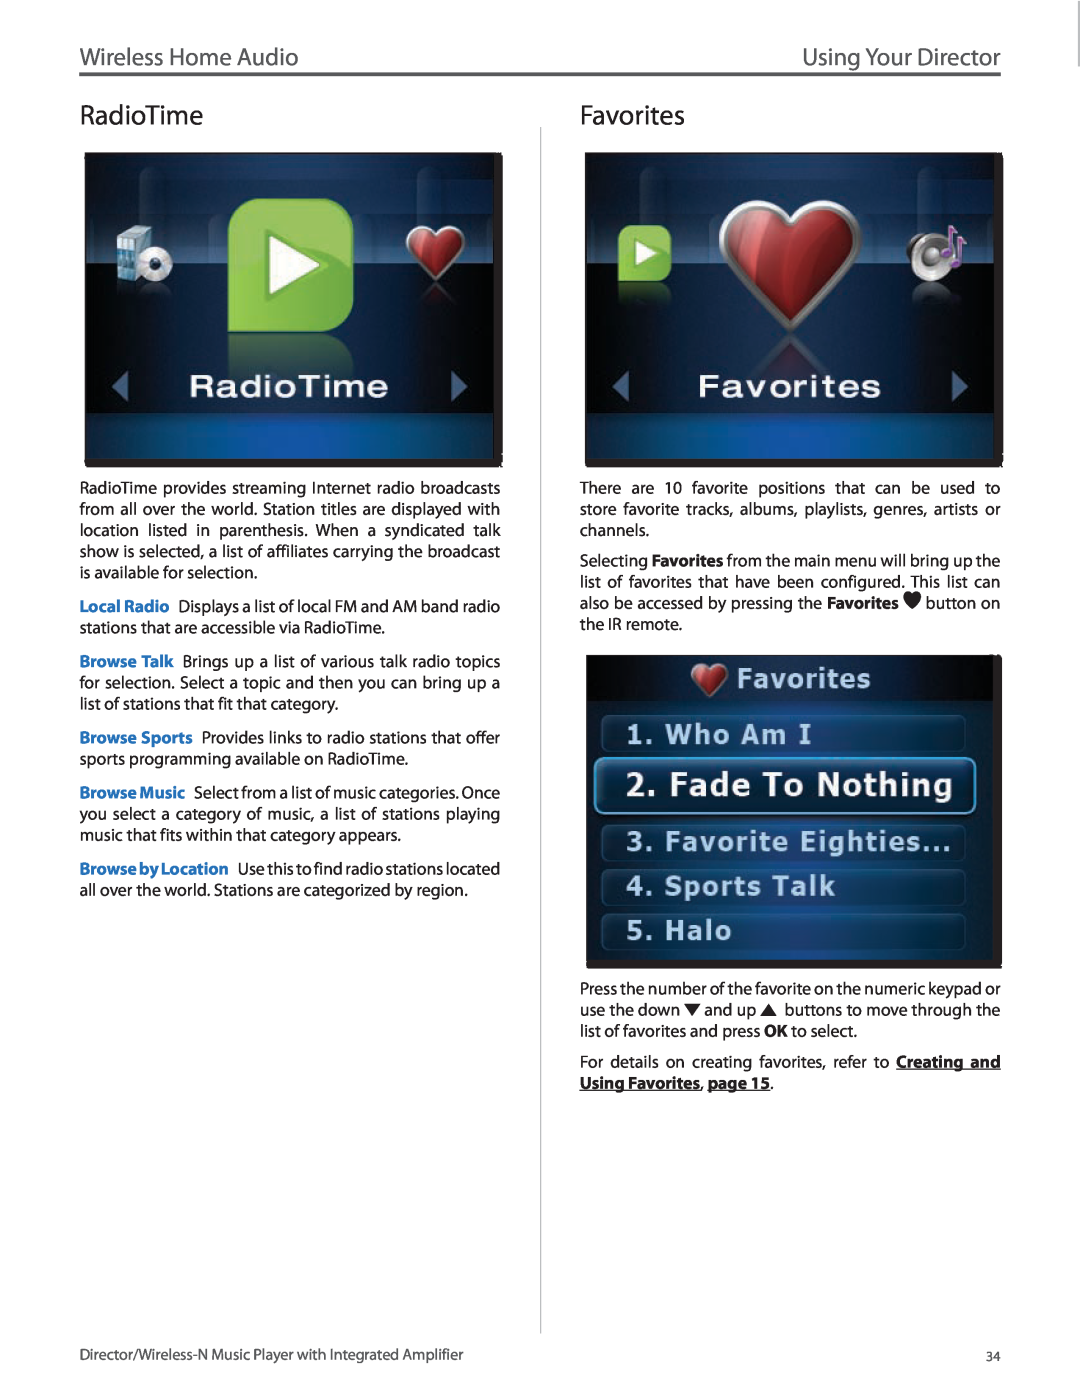 Linksys DMC250 manual RadioTime, Favorites, Wireless Home Audio, Using Your Director 